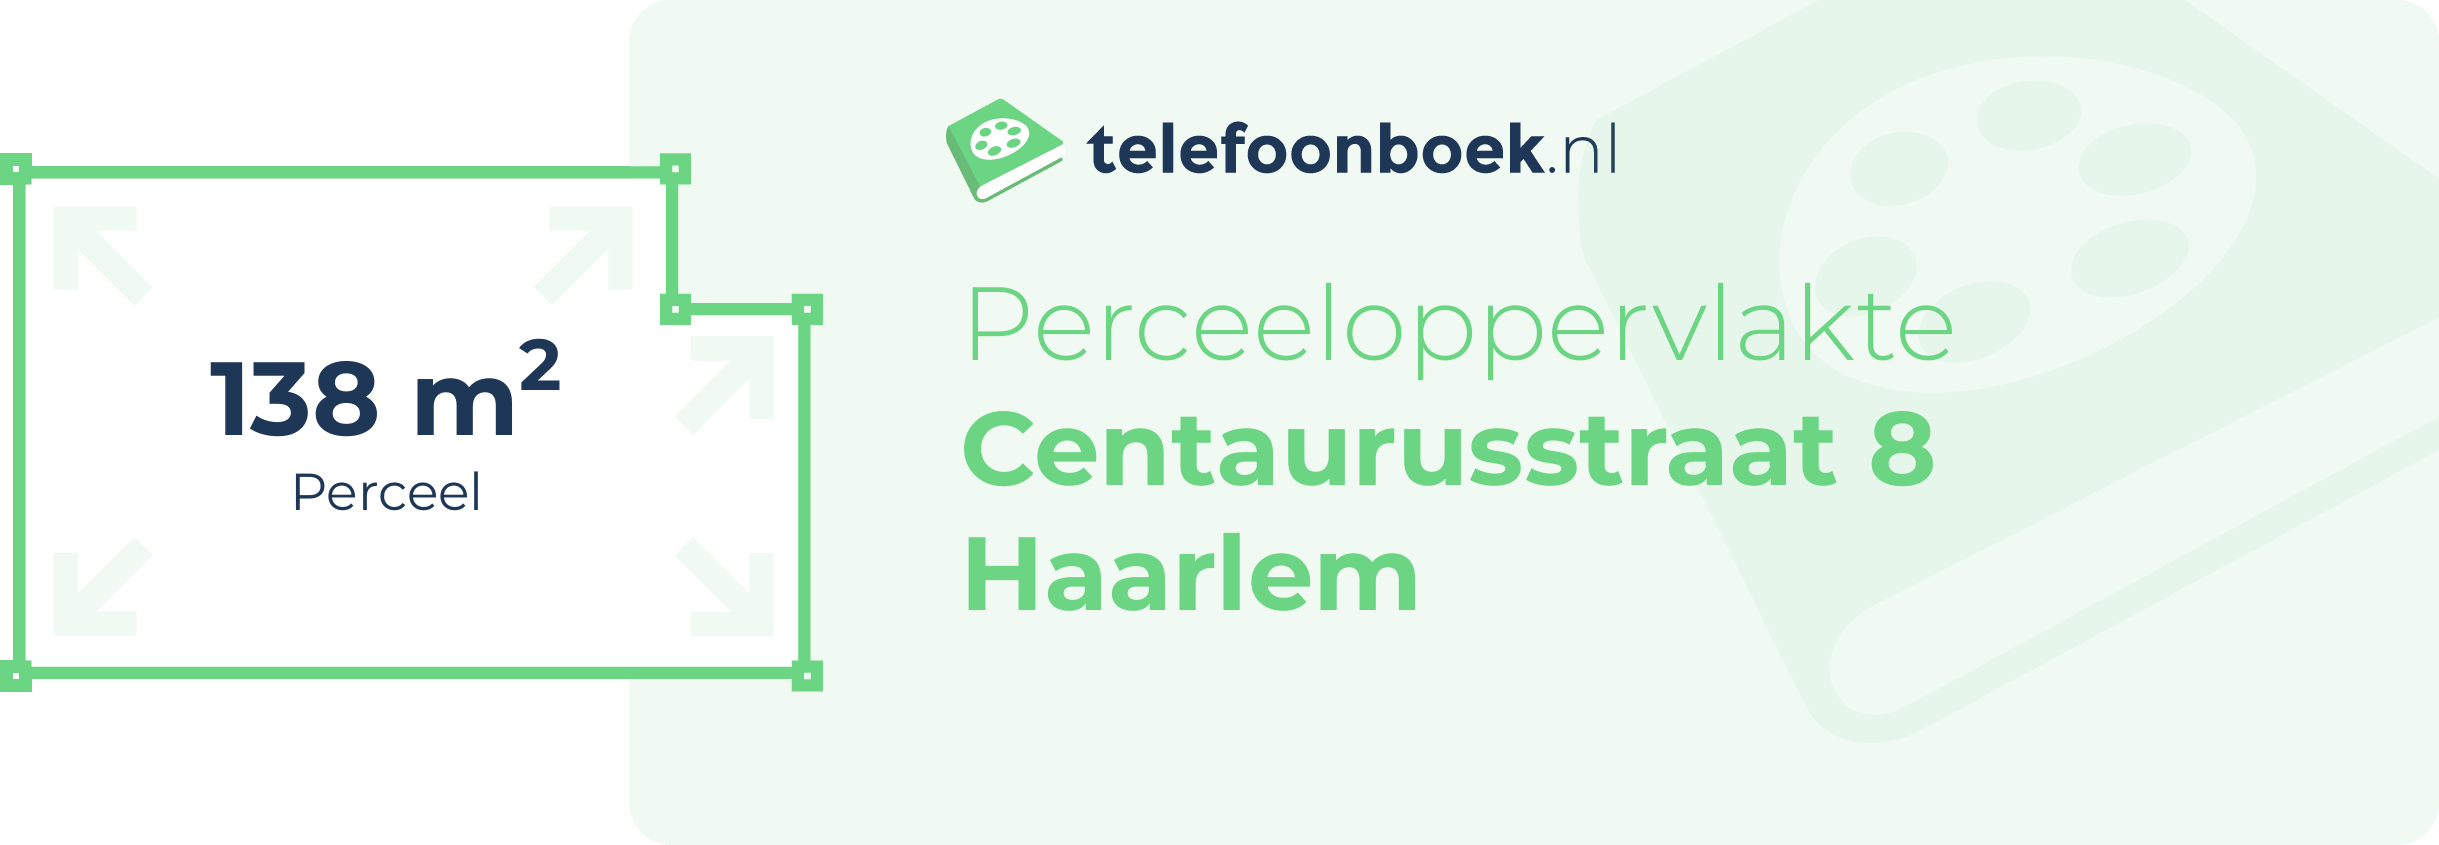 Perceeloppervlakte Centaurusstraat 8 Haarlem